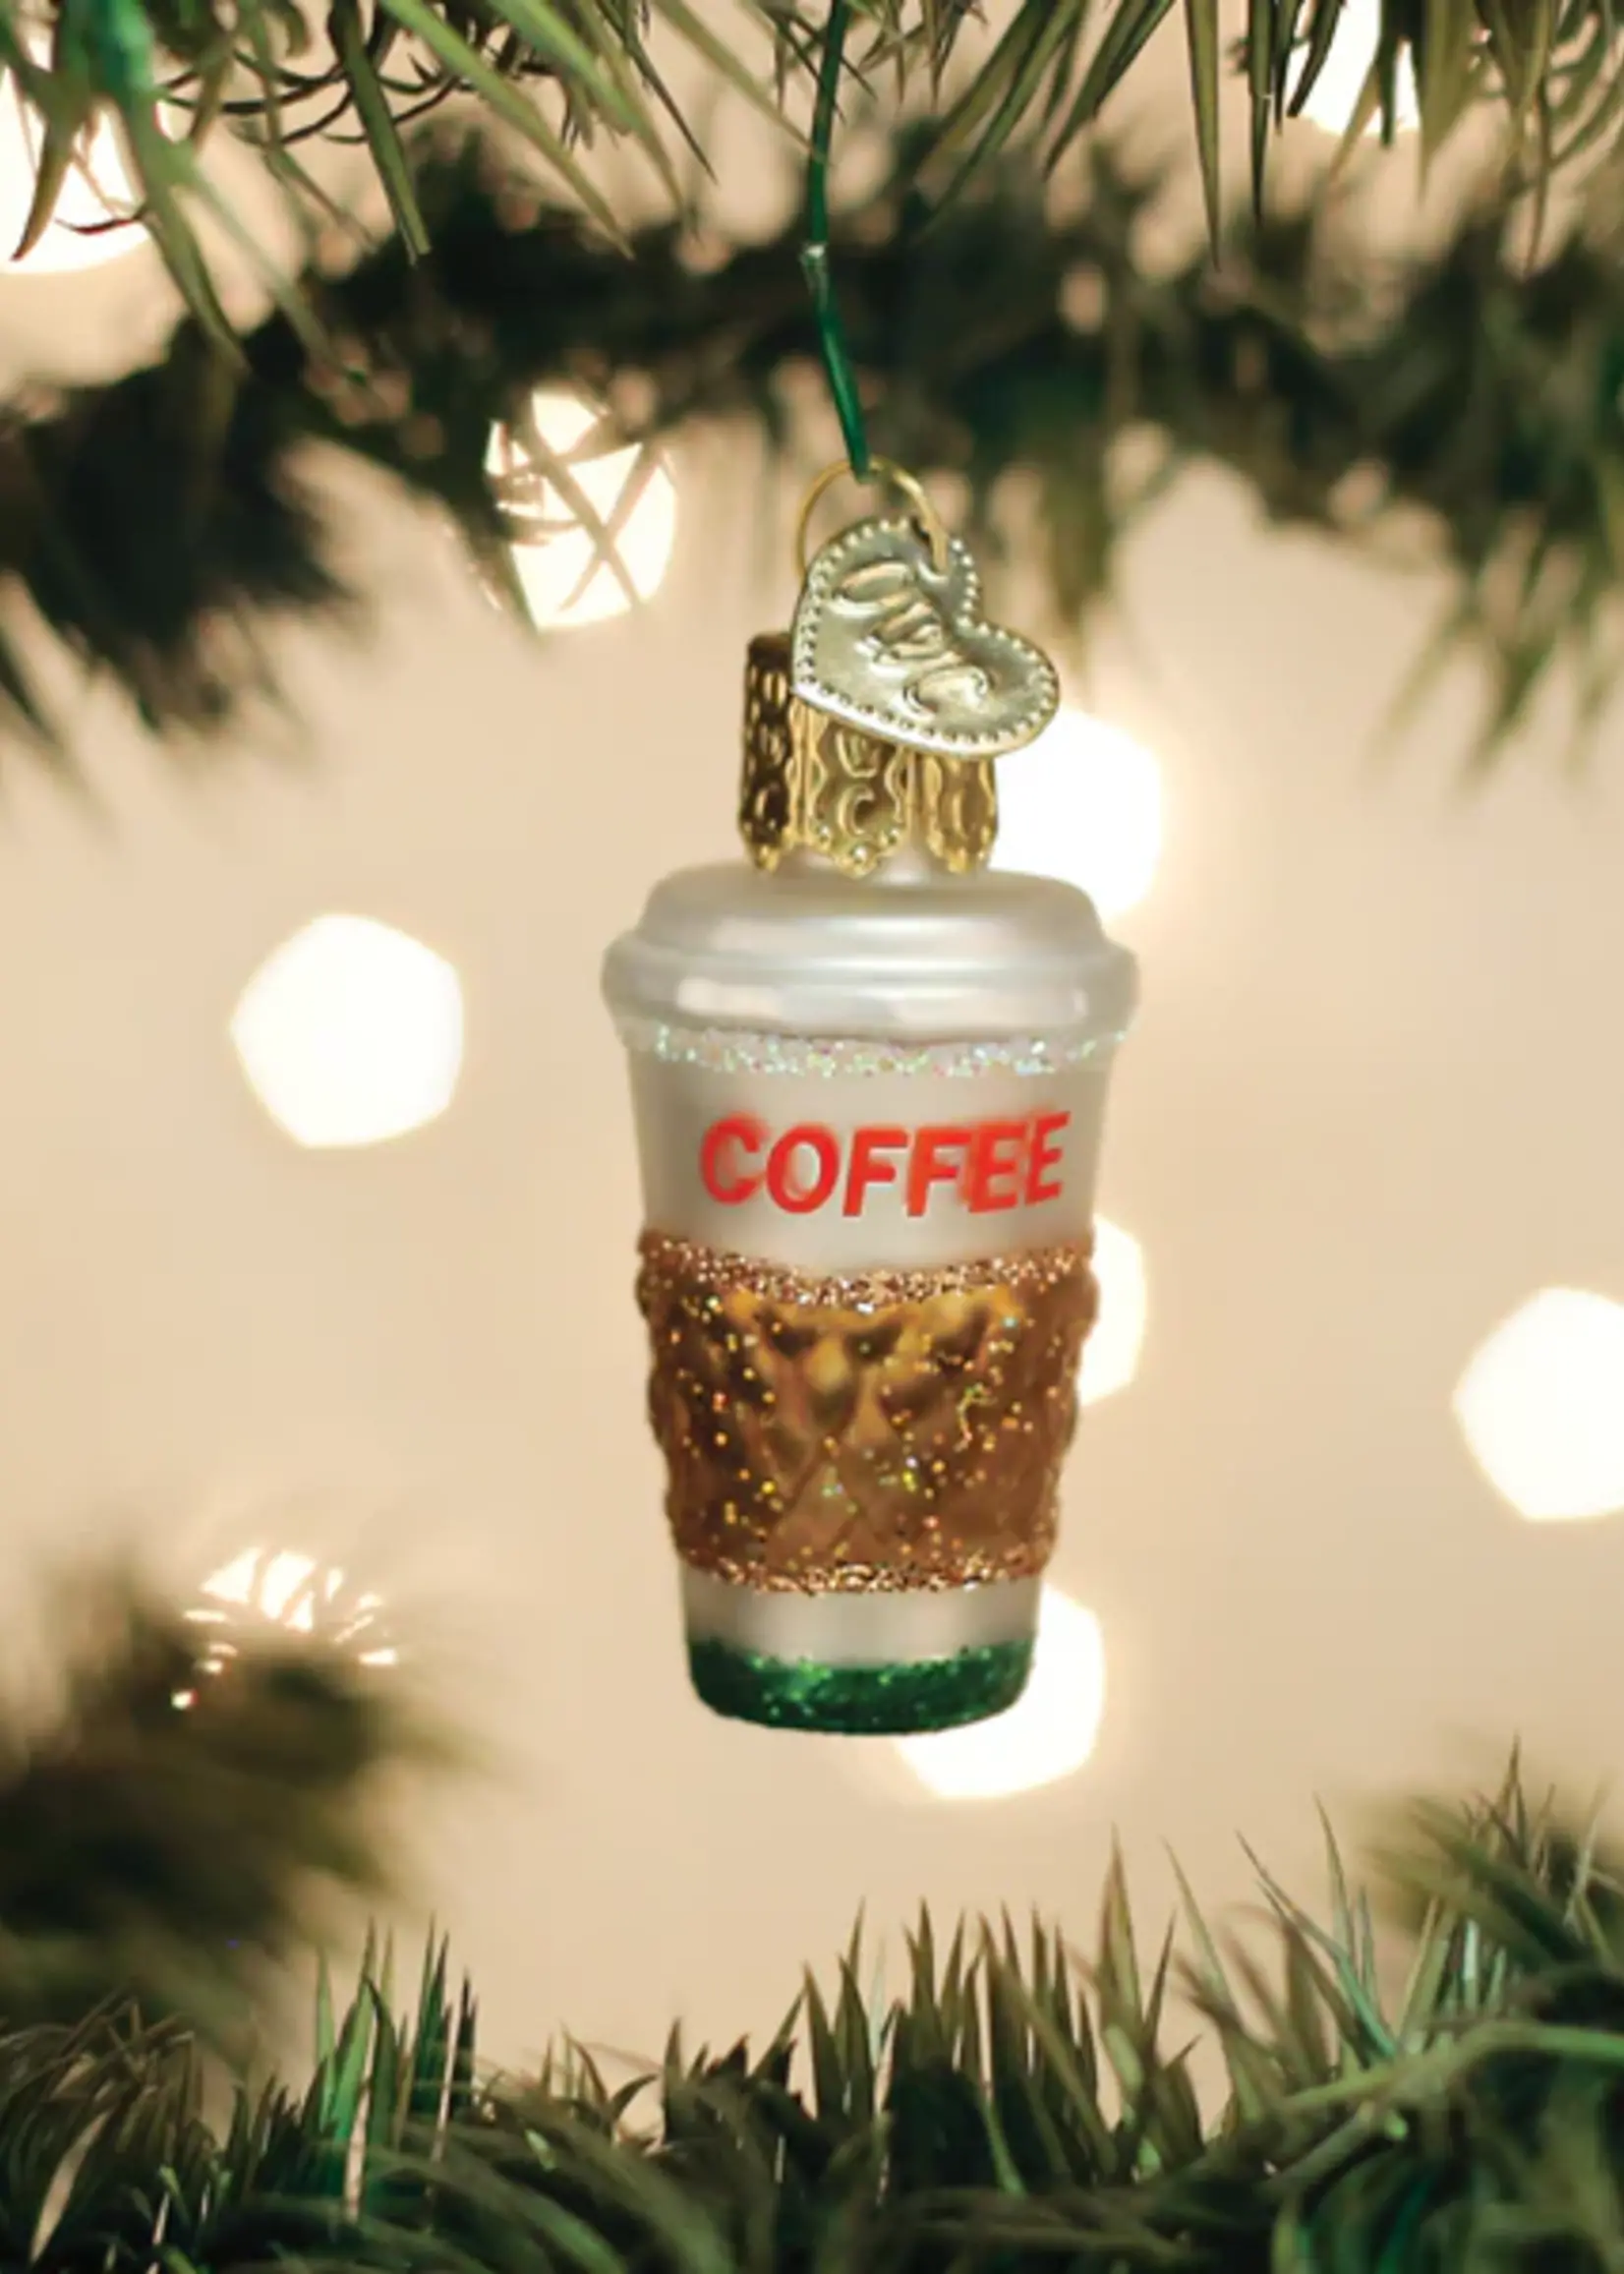 GUMDROPS OLD WORLD CHRISTMAS MINI COFFEE TO GO ORNAMENT owc-orn-mini coffee to go